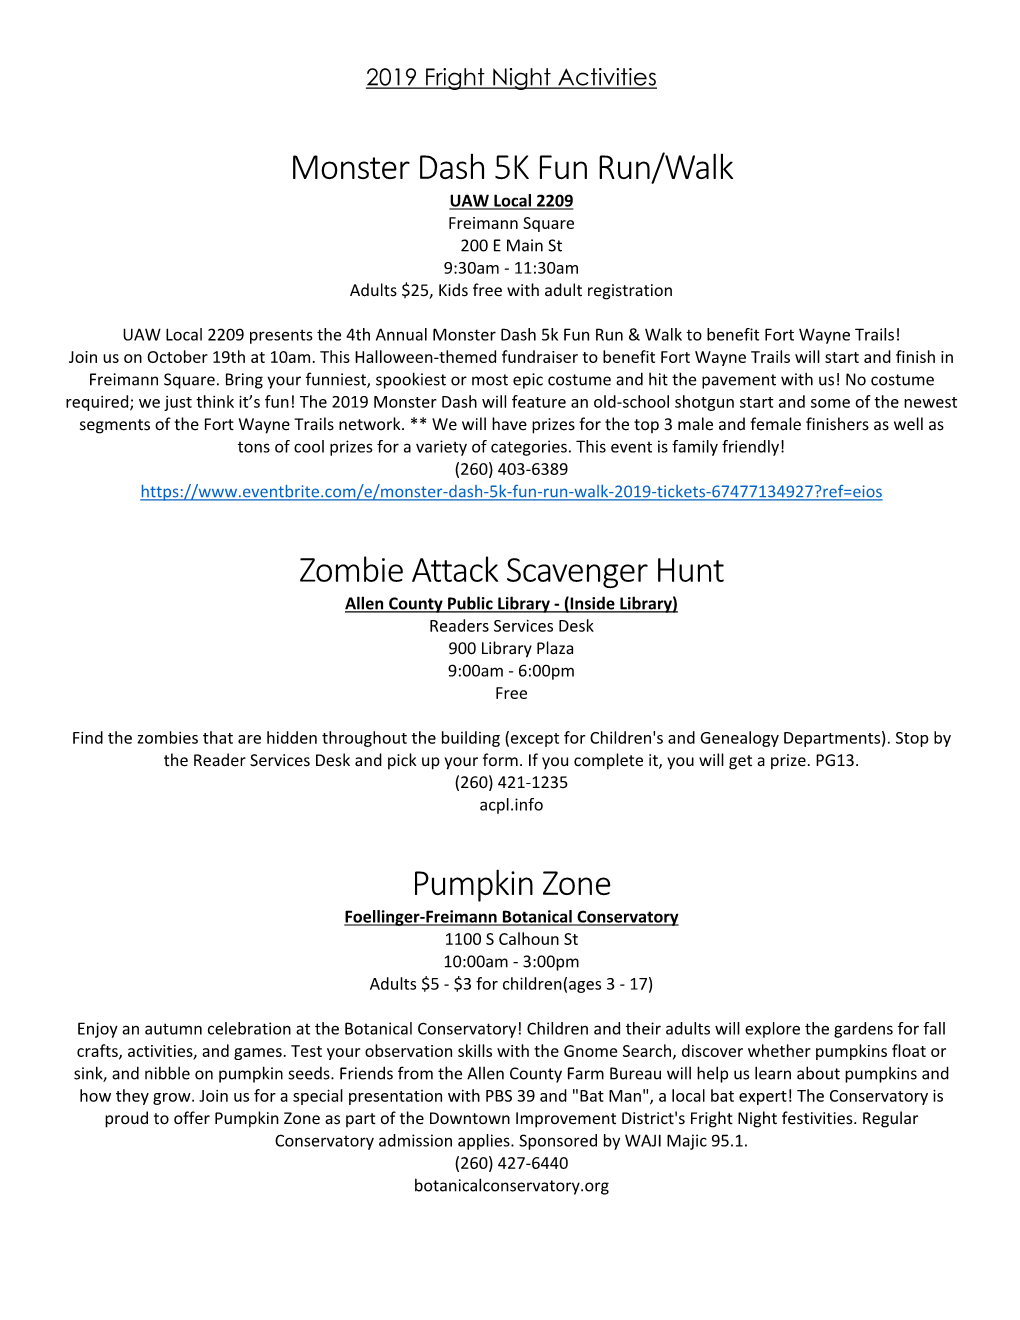 Monster Dash 5K Fun Run/Walk Zombie Attack Scavenger Hunt